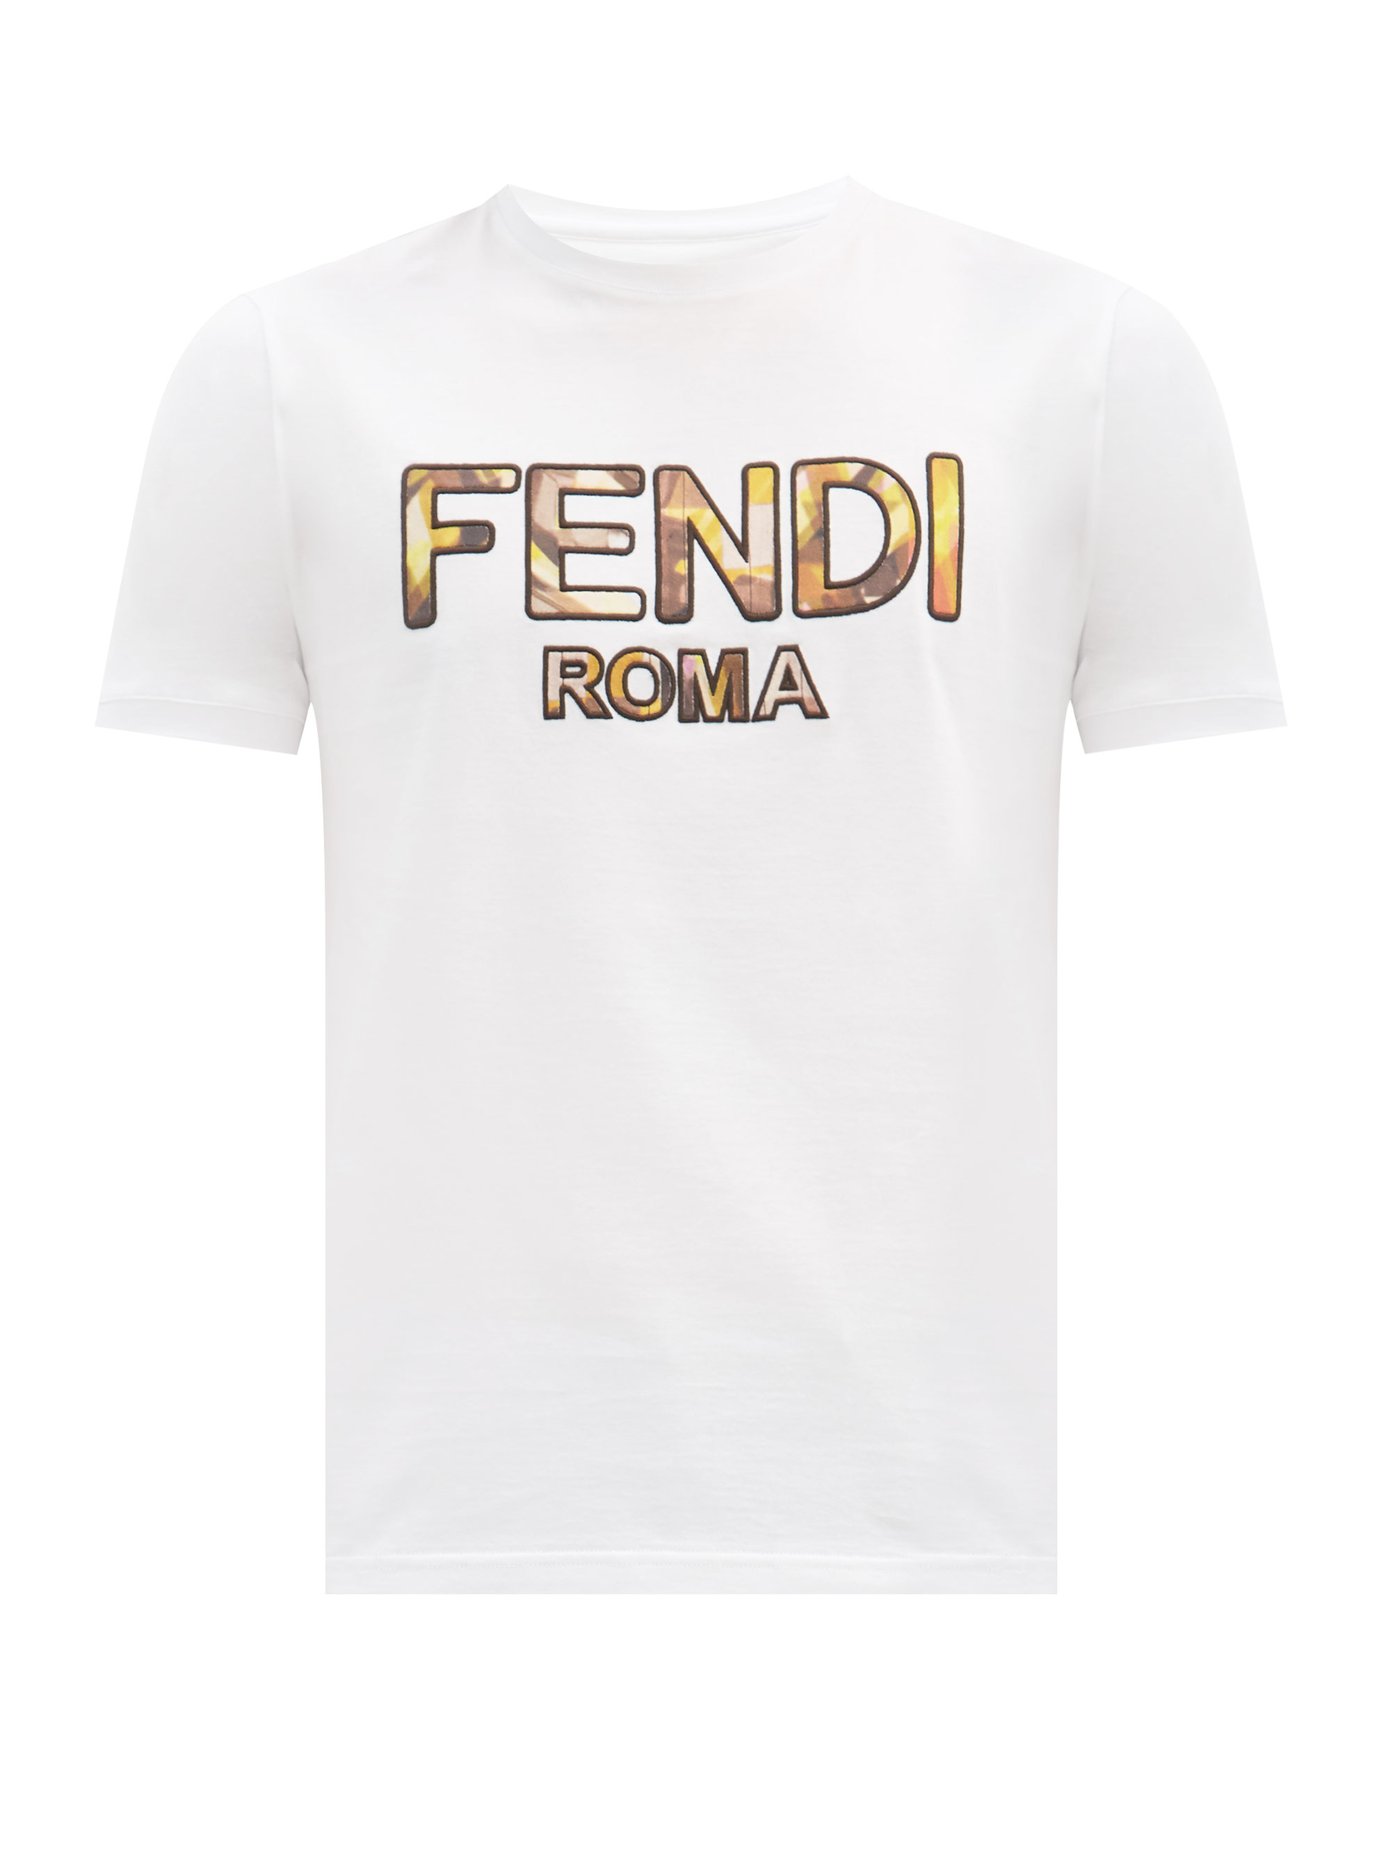 fendi roma shirt price